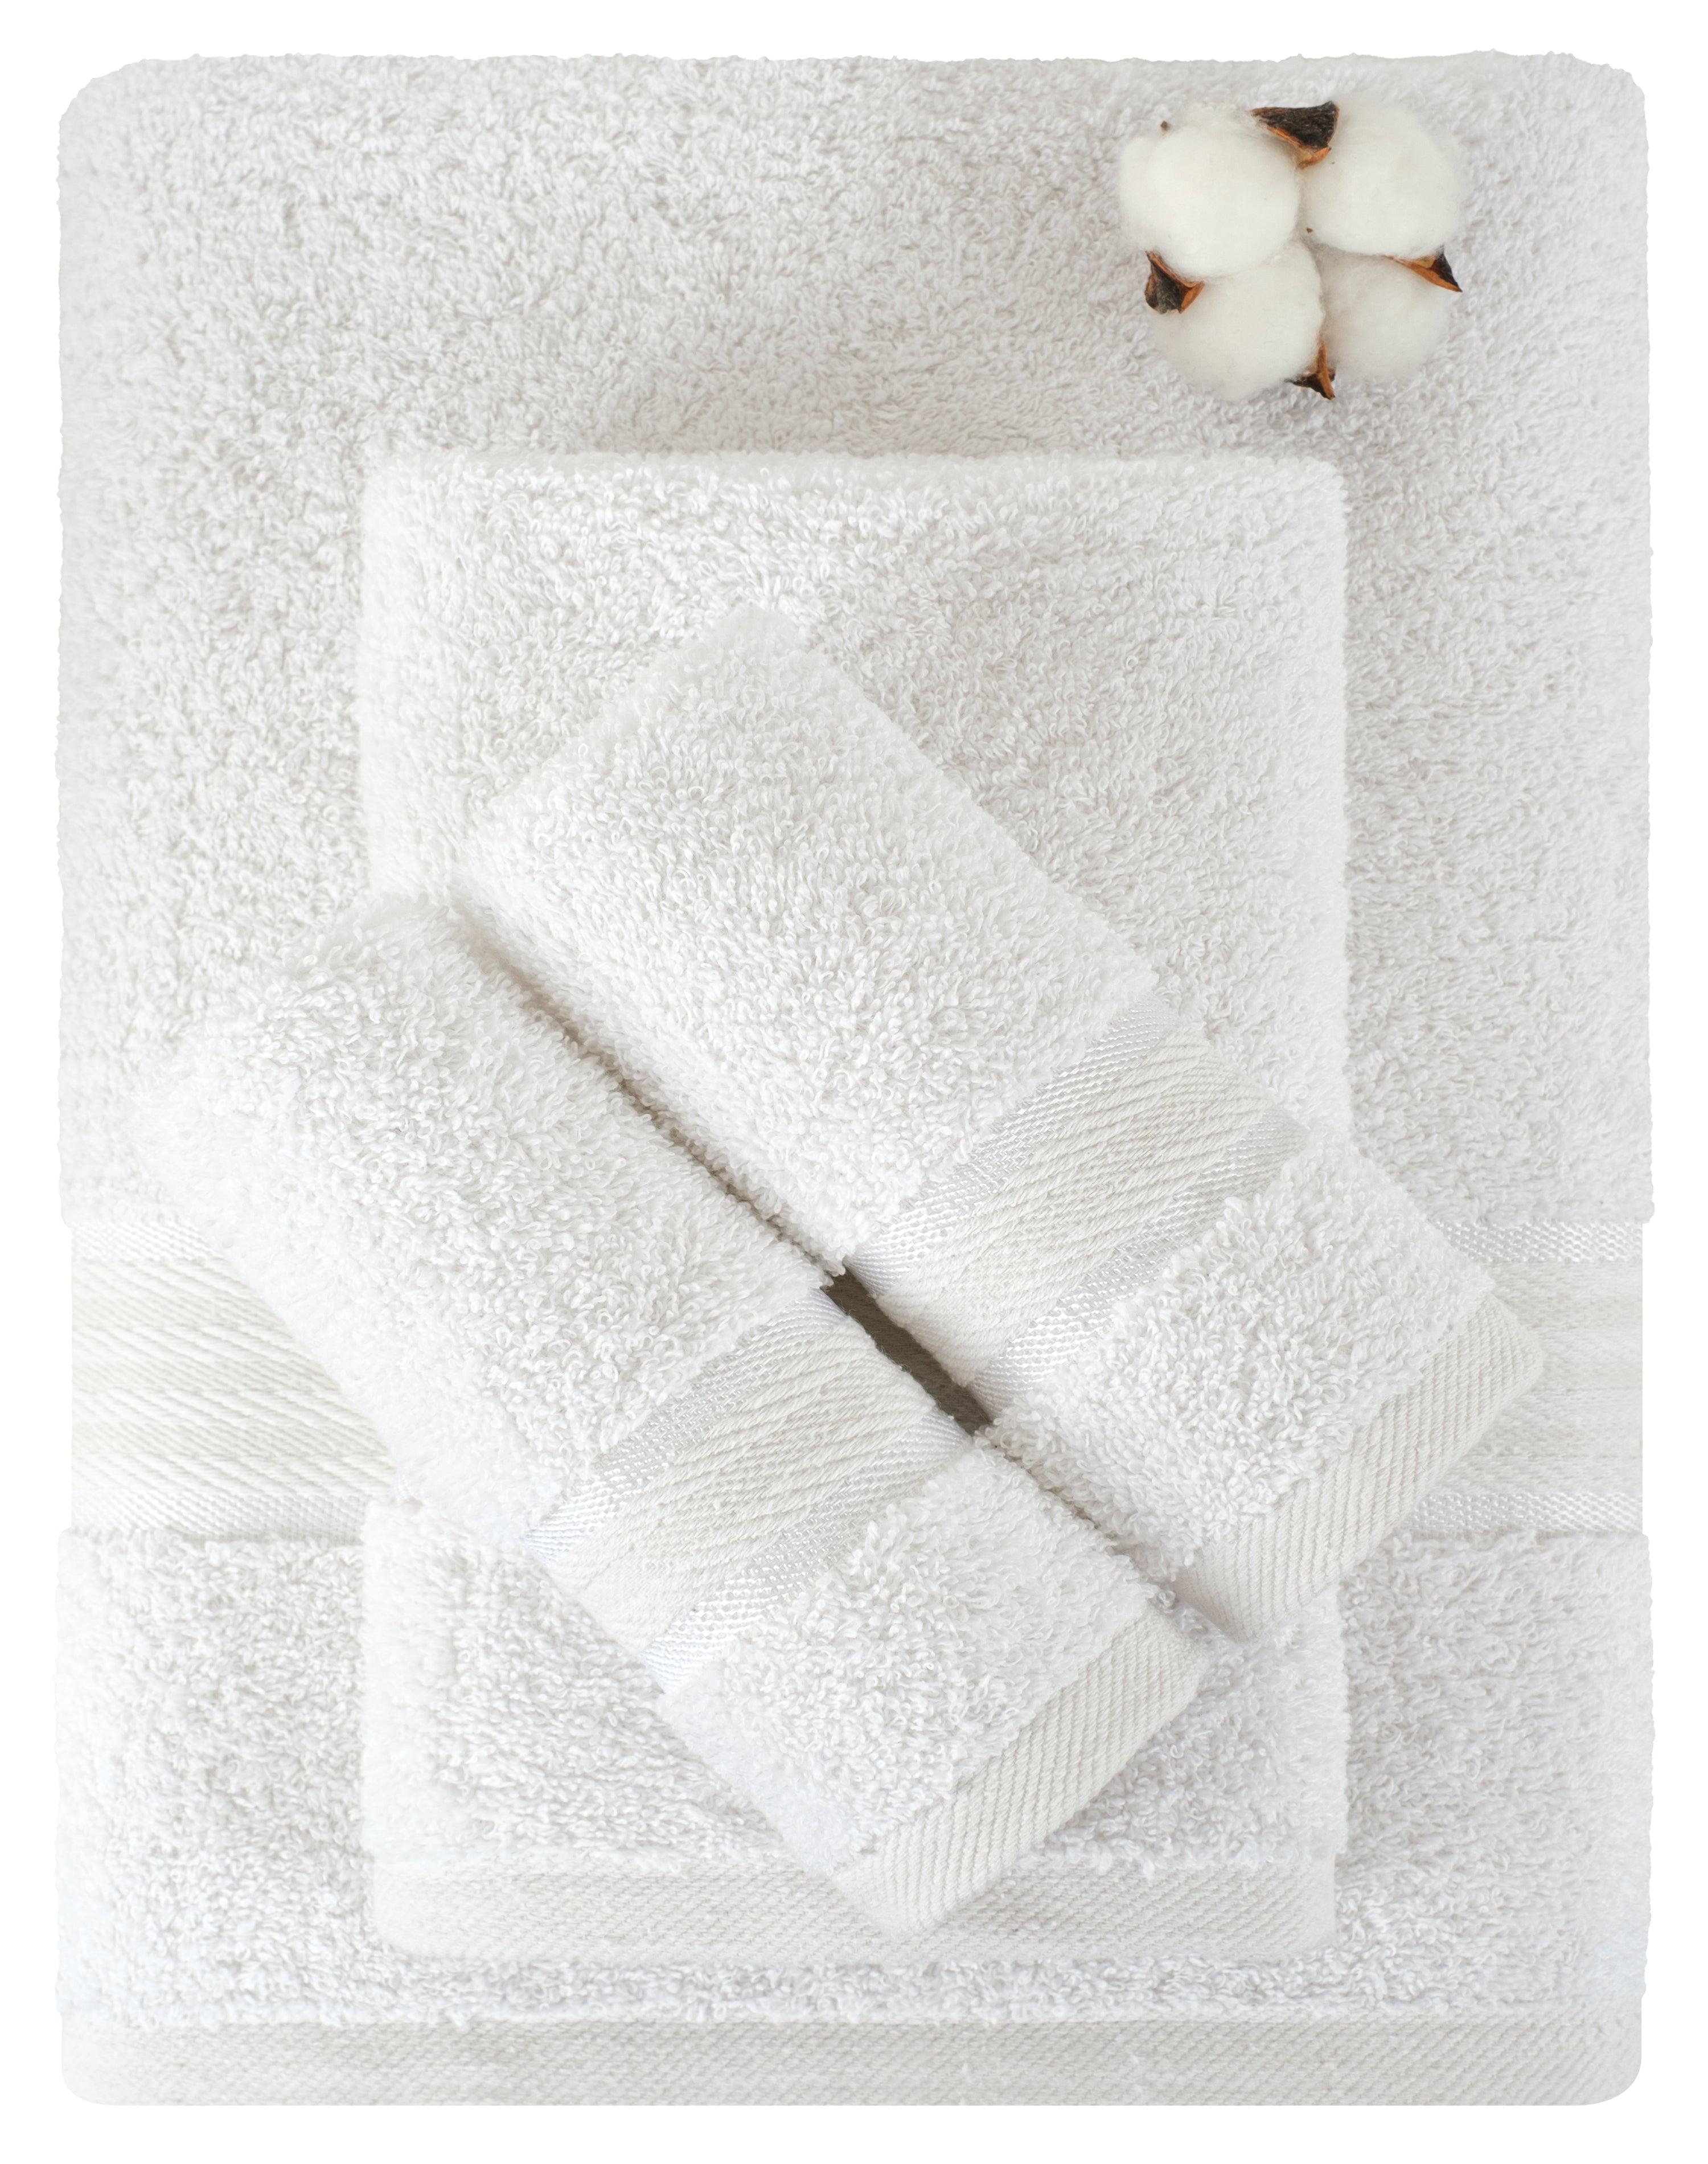 American Soft Linen - Salem 6 Piece Turkish Cotton Luxury Towel Set - White - 5